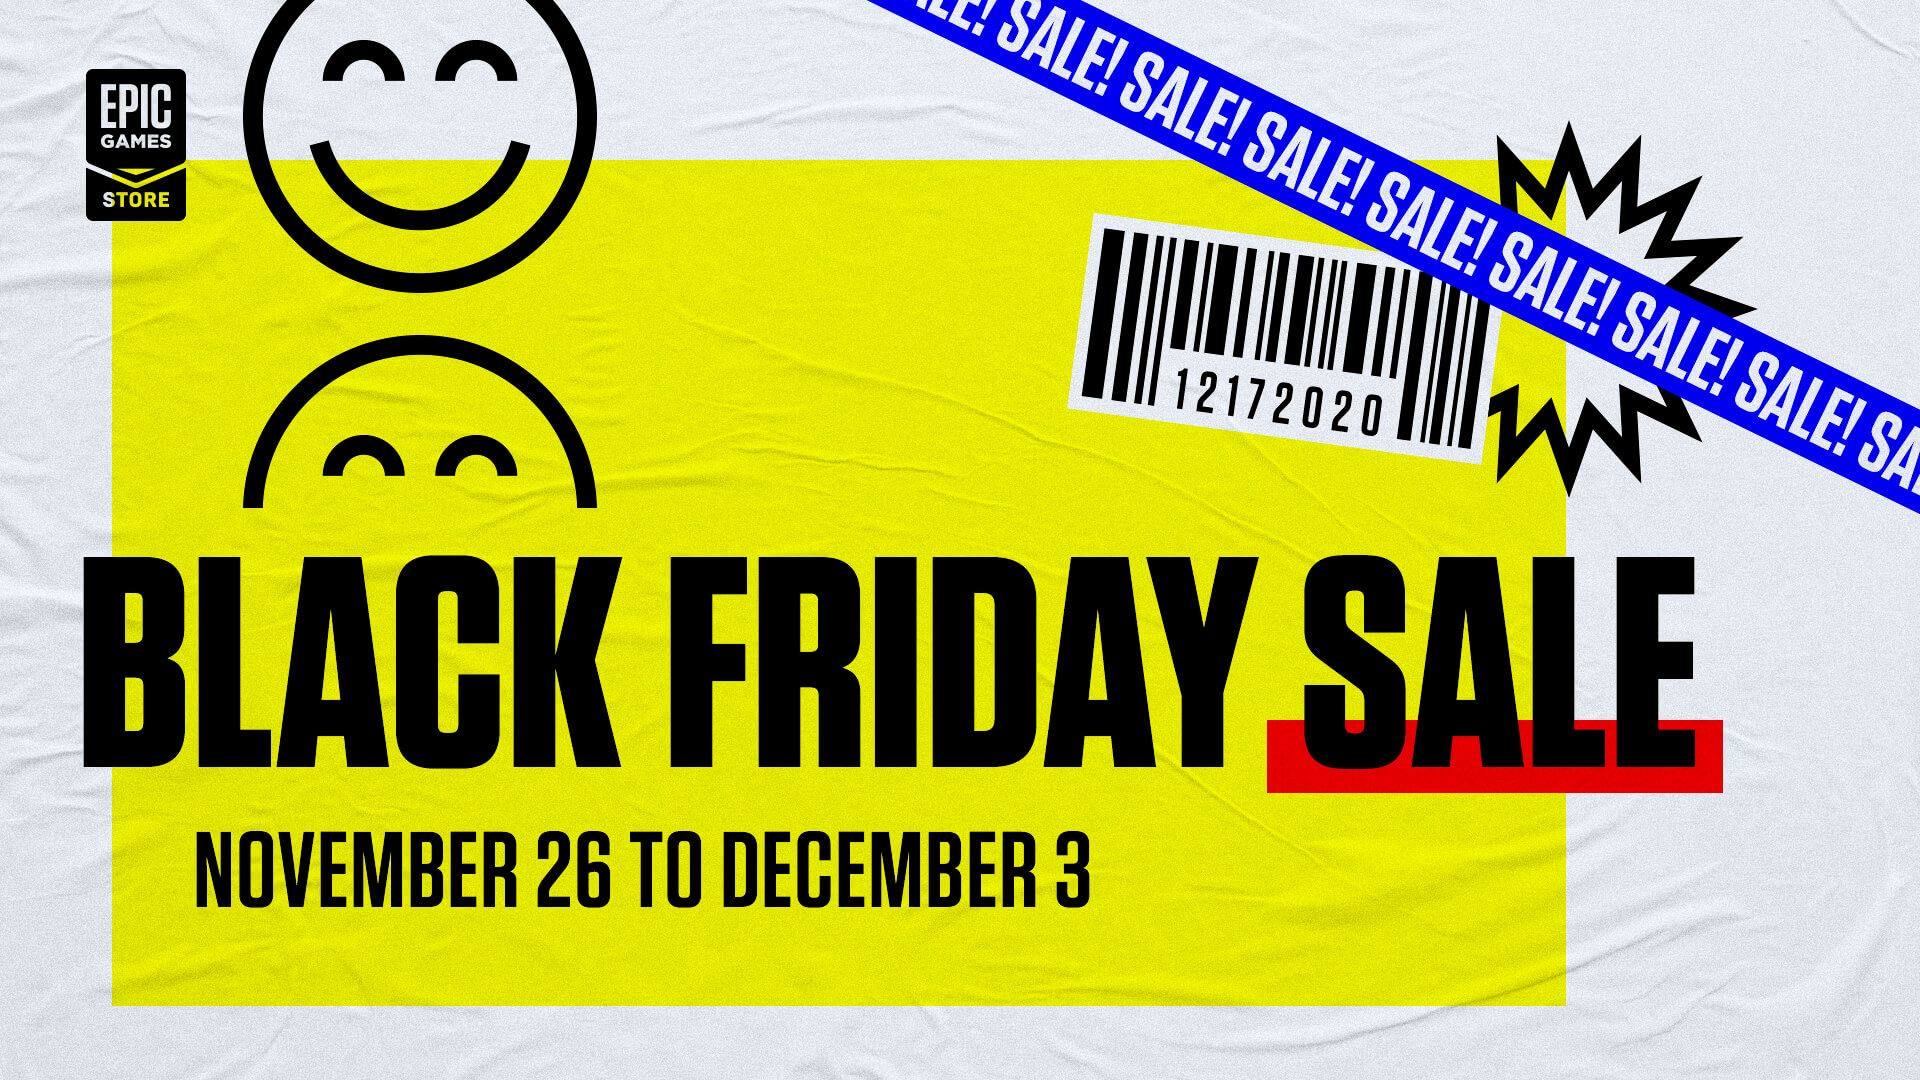 Epic Store Black Friday Sale 2020! - hotukdeals